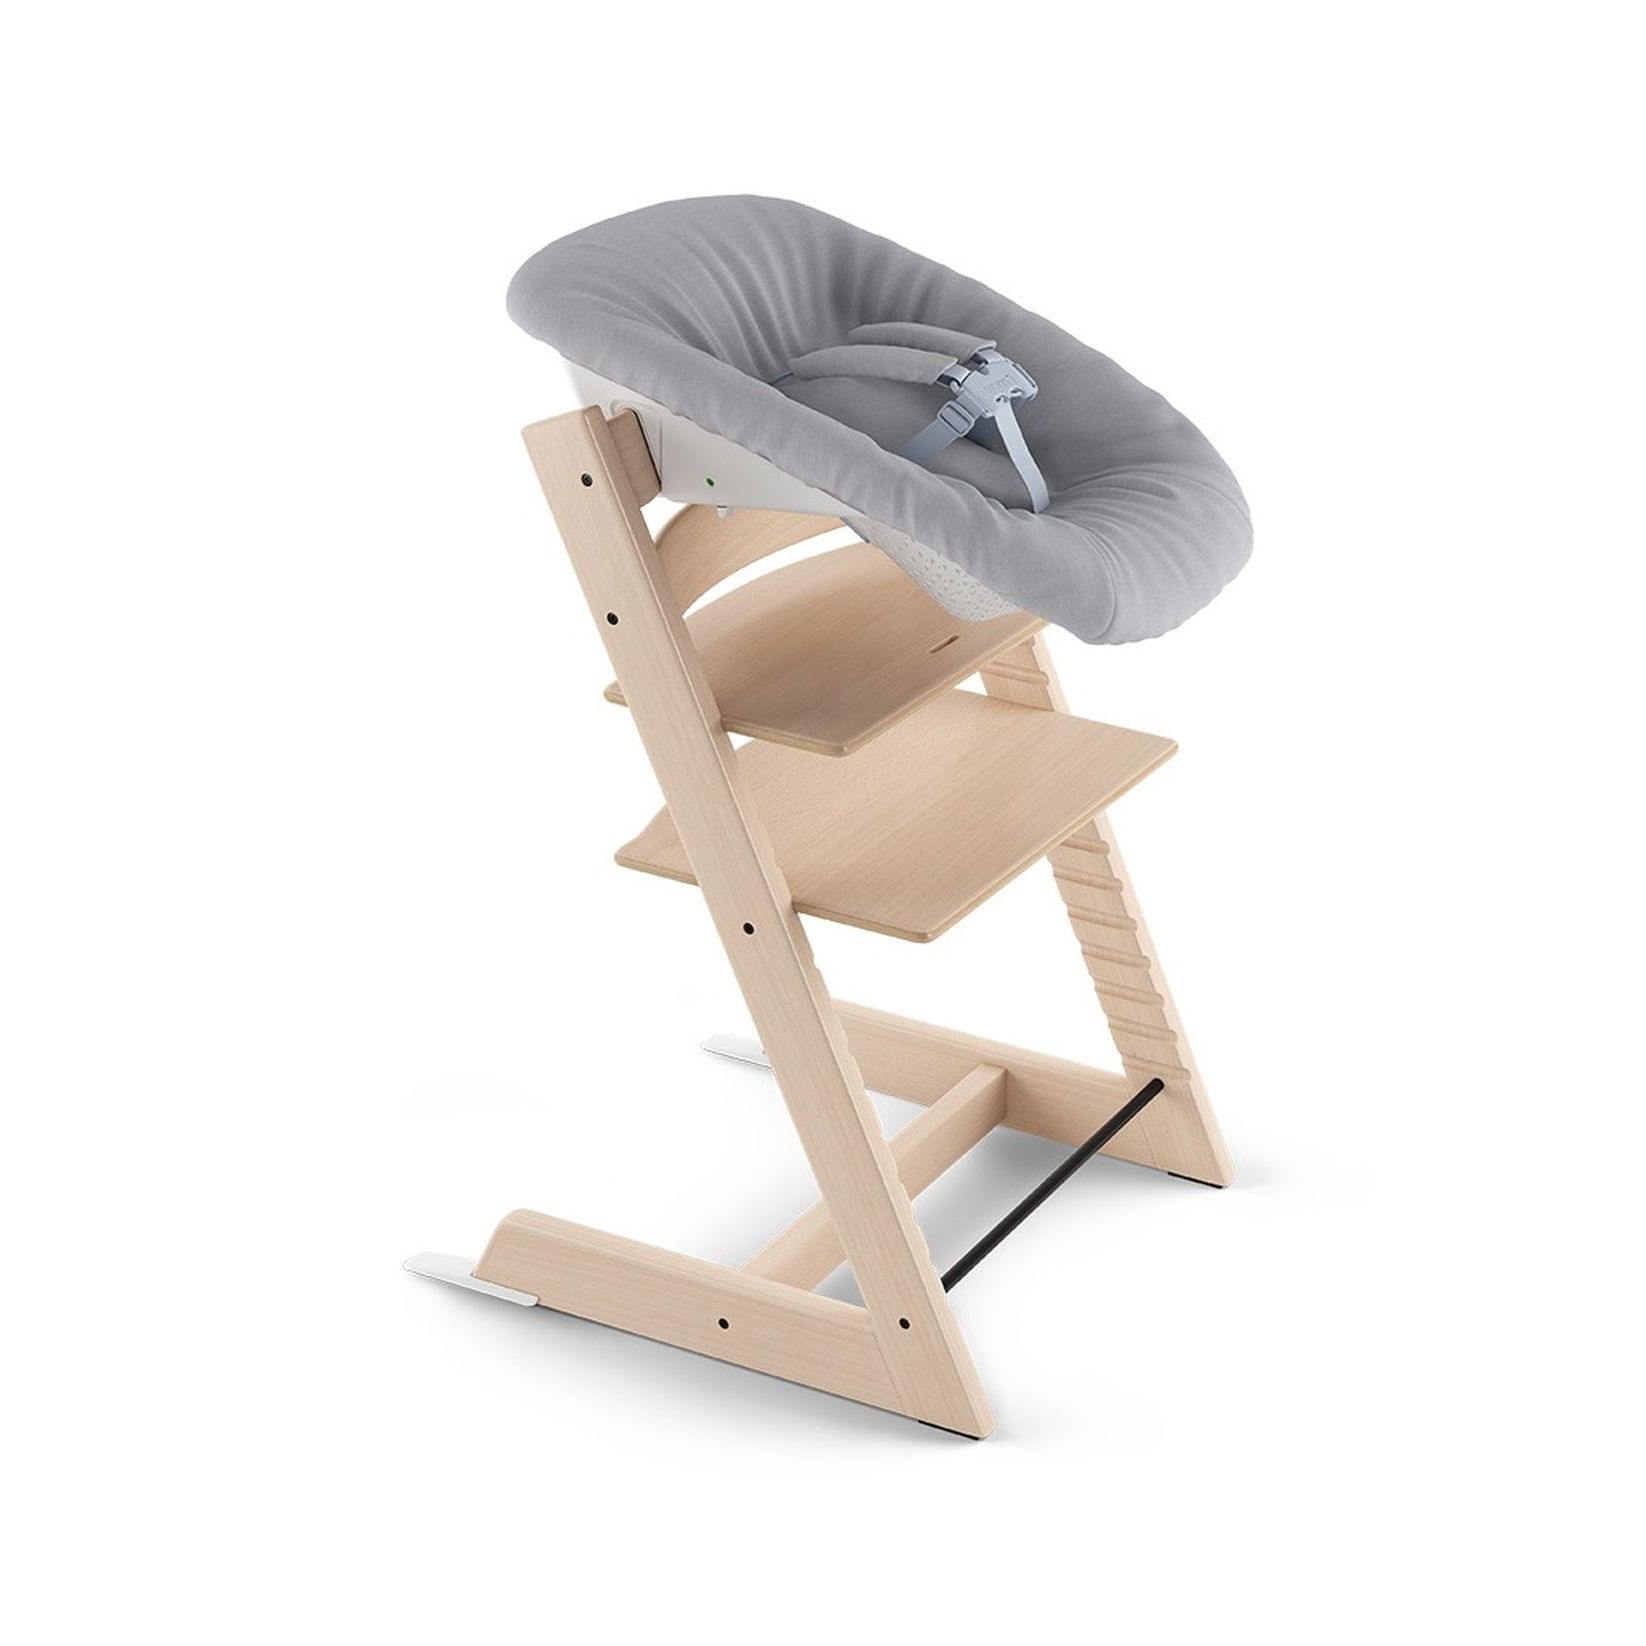 STOKKE Newborn set with toy hanger - Grey